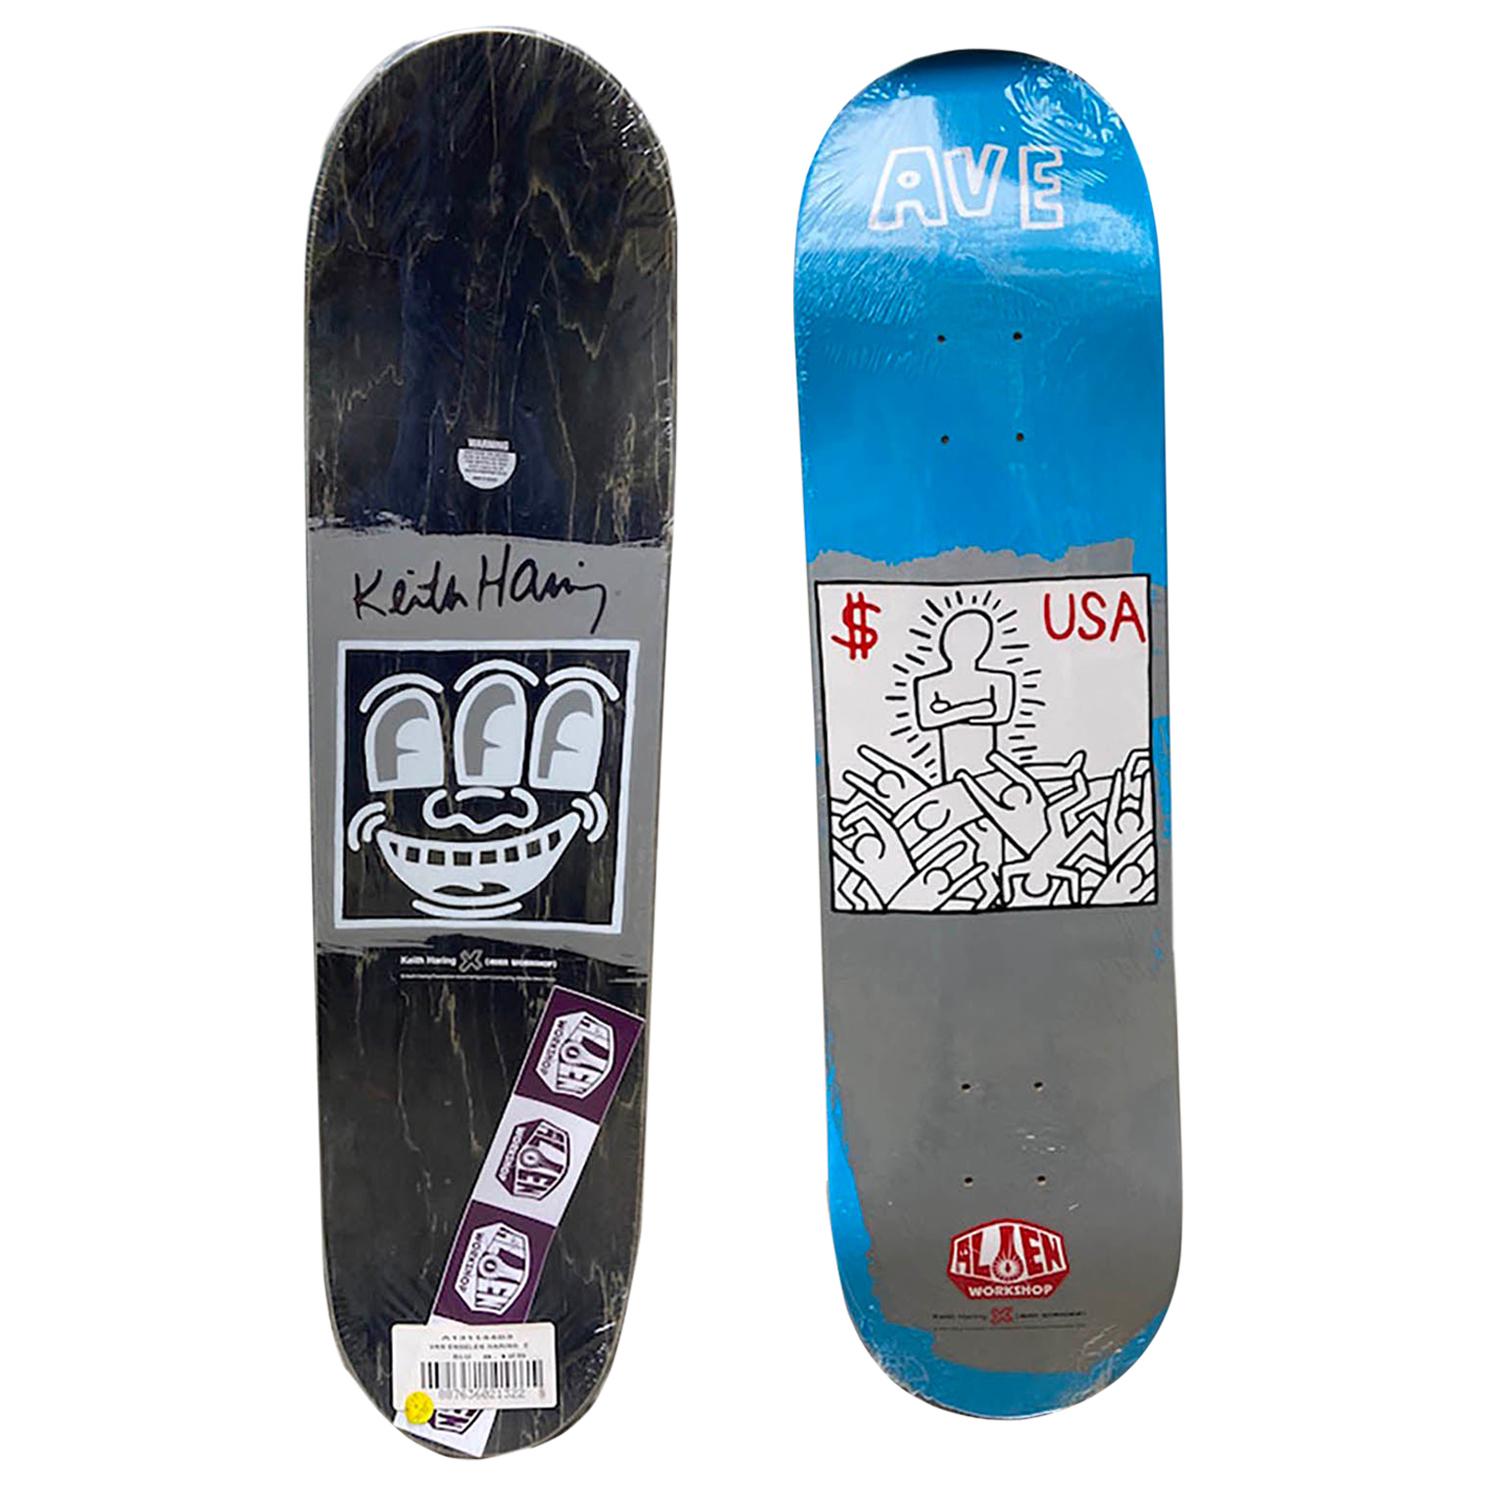 Keith Haring, Sammler von AVE-Skateboard